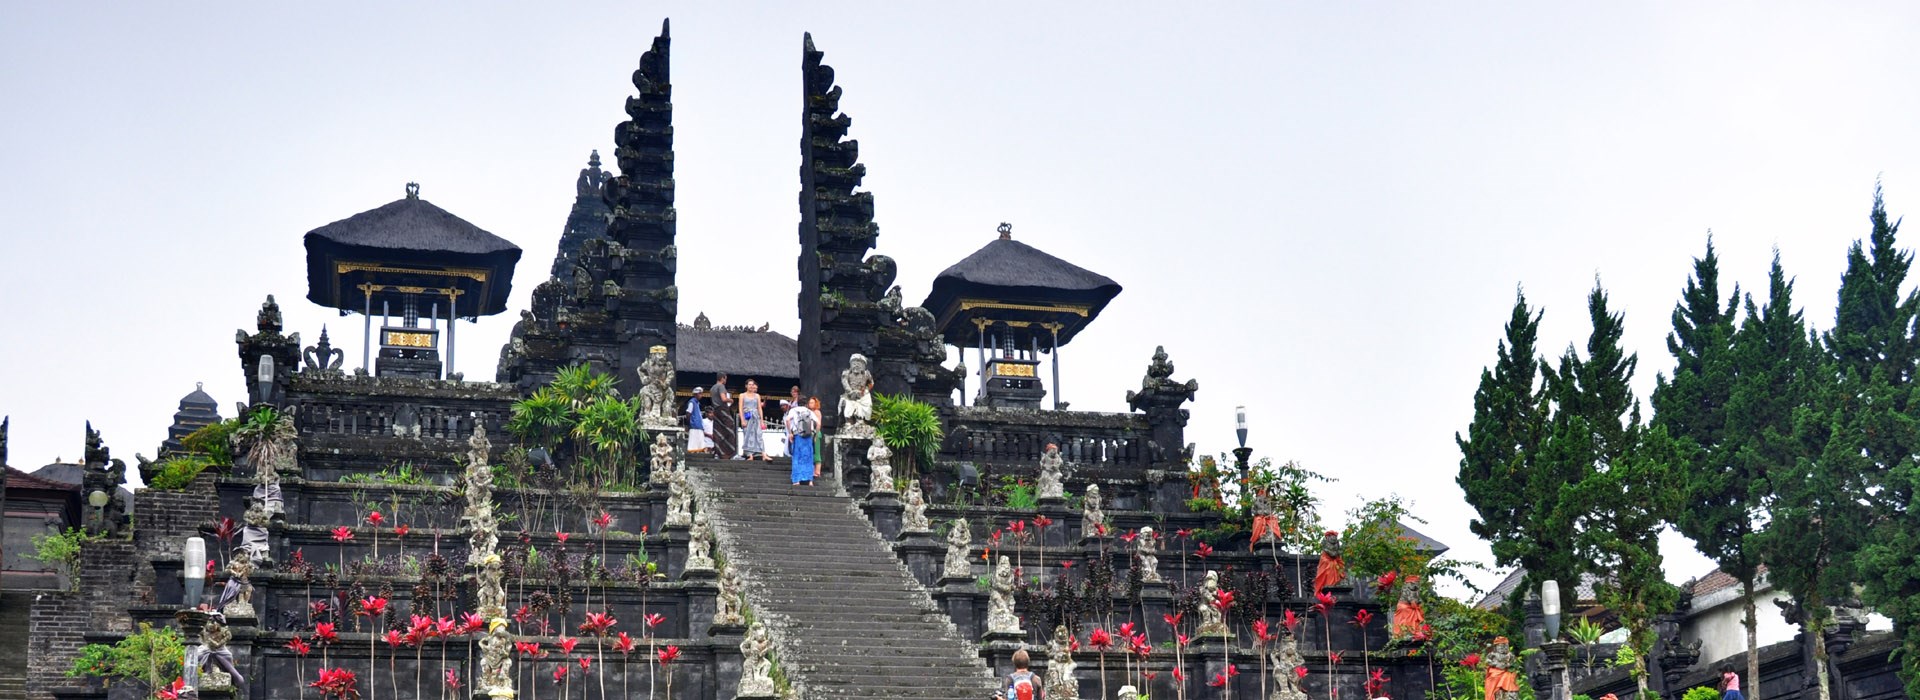 Visiter Les temples Besakih - Indonesie